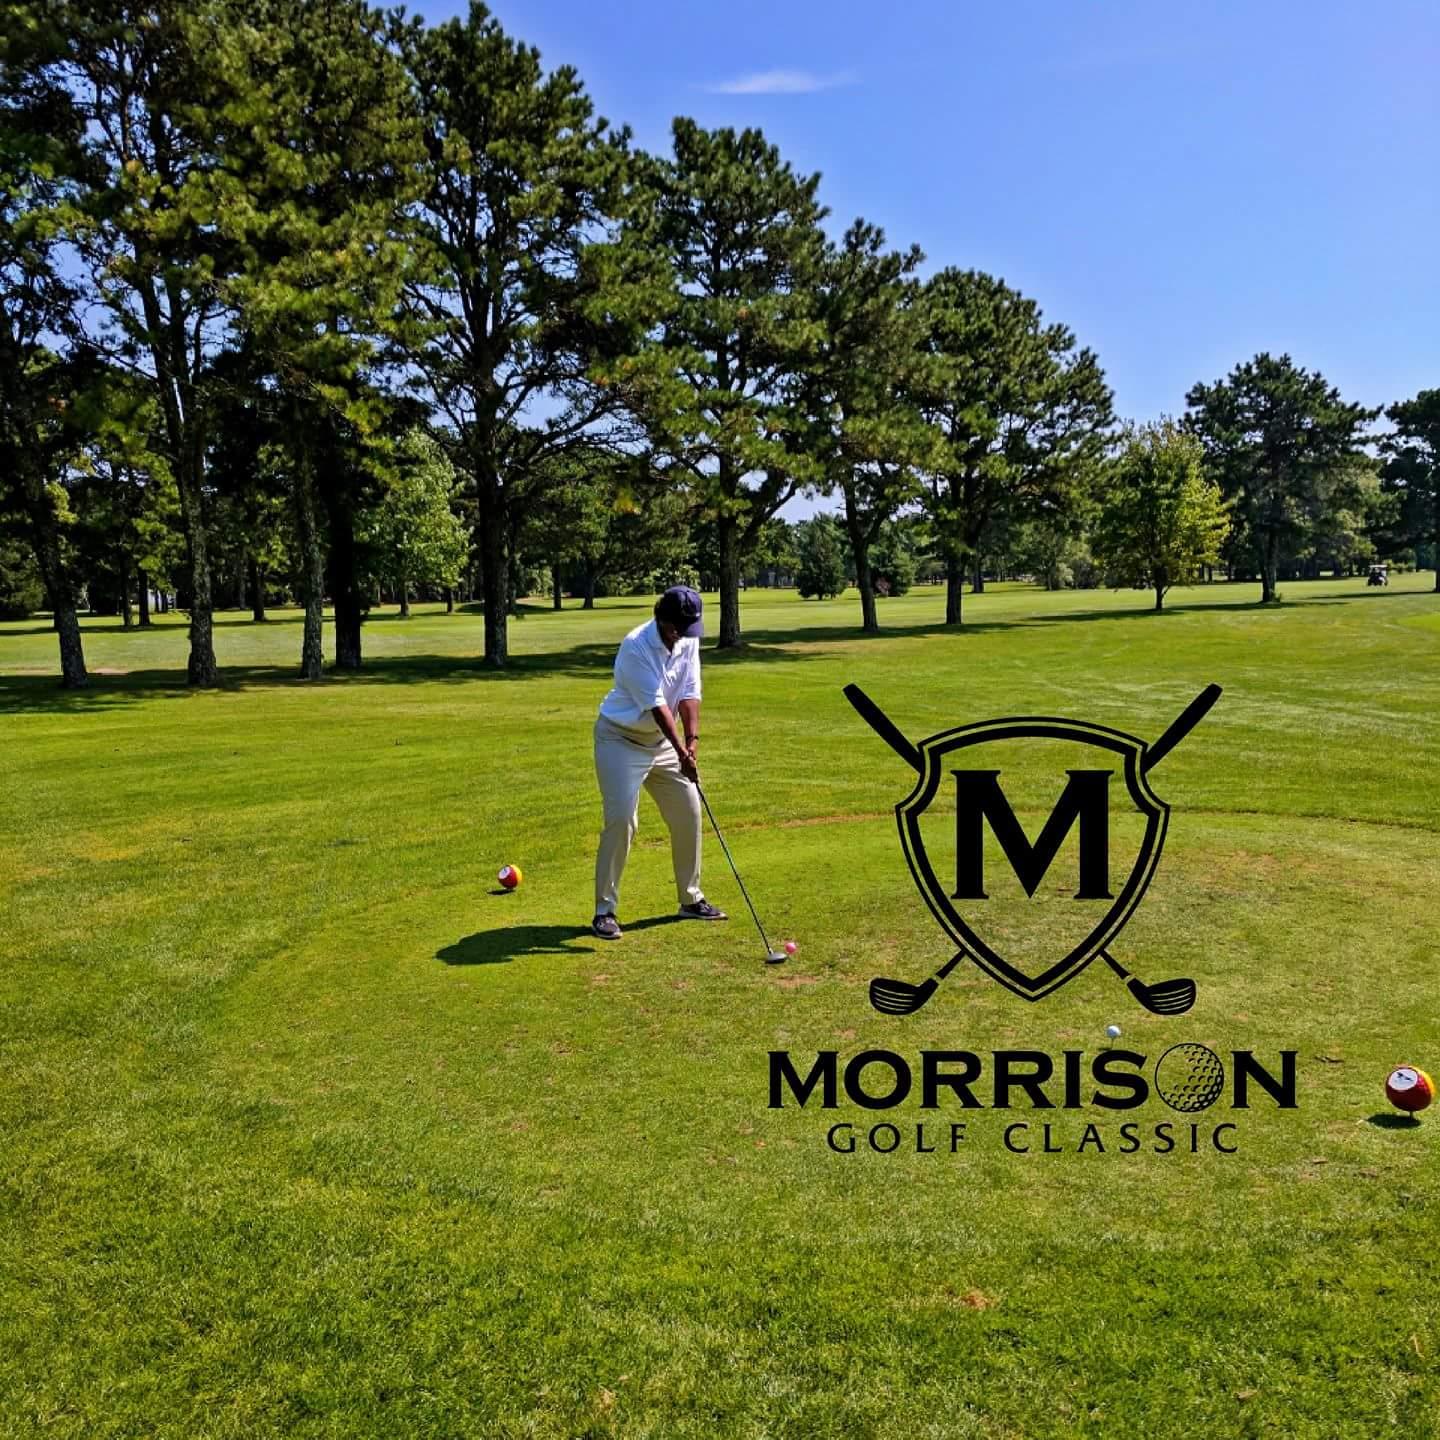 20th Annual Morrison Golf Classic